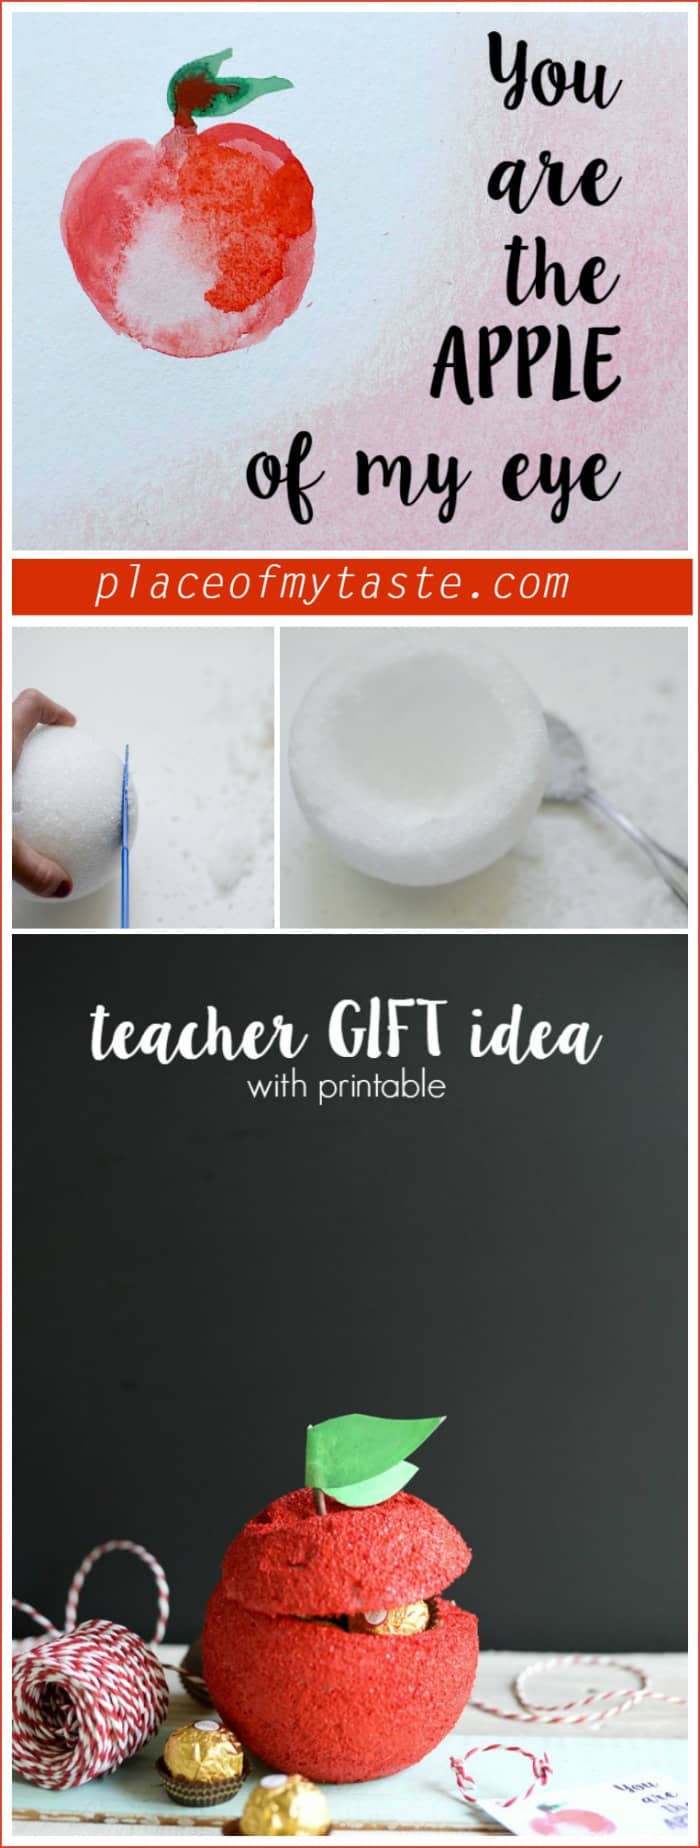 CUTE TEACHER GIFT IDEA